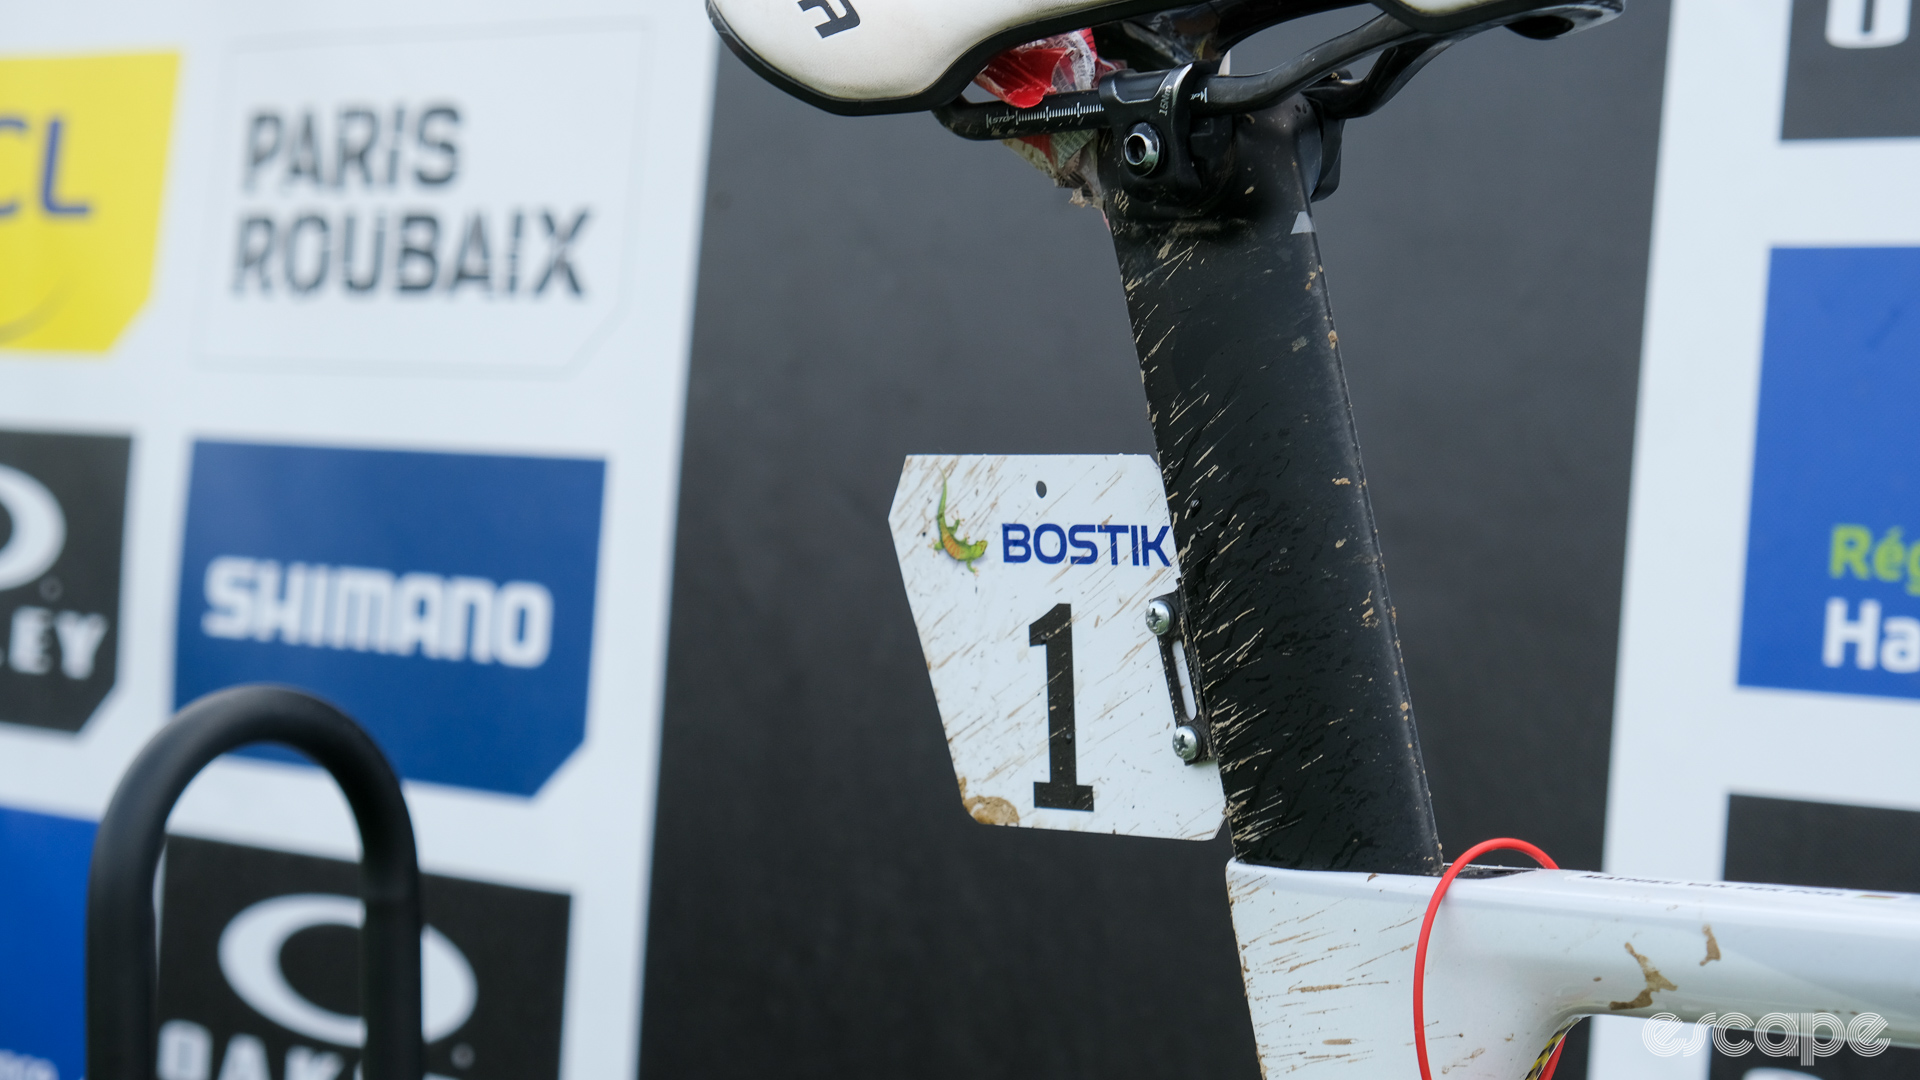 The image shows Mathieu van der Poel's race number